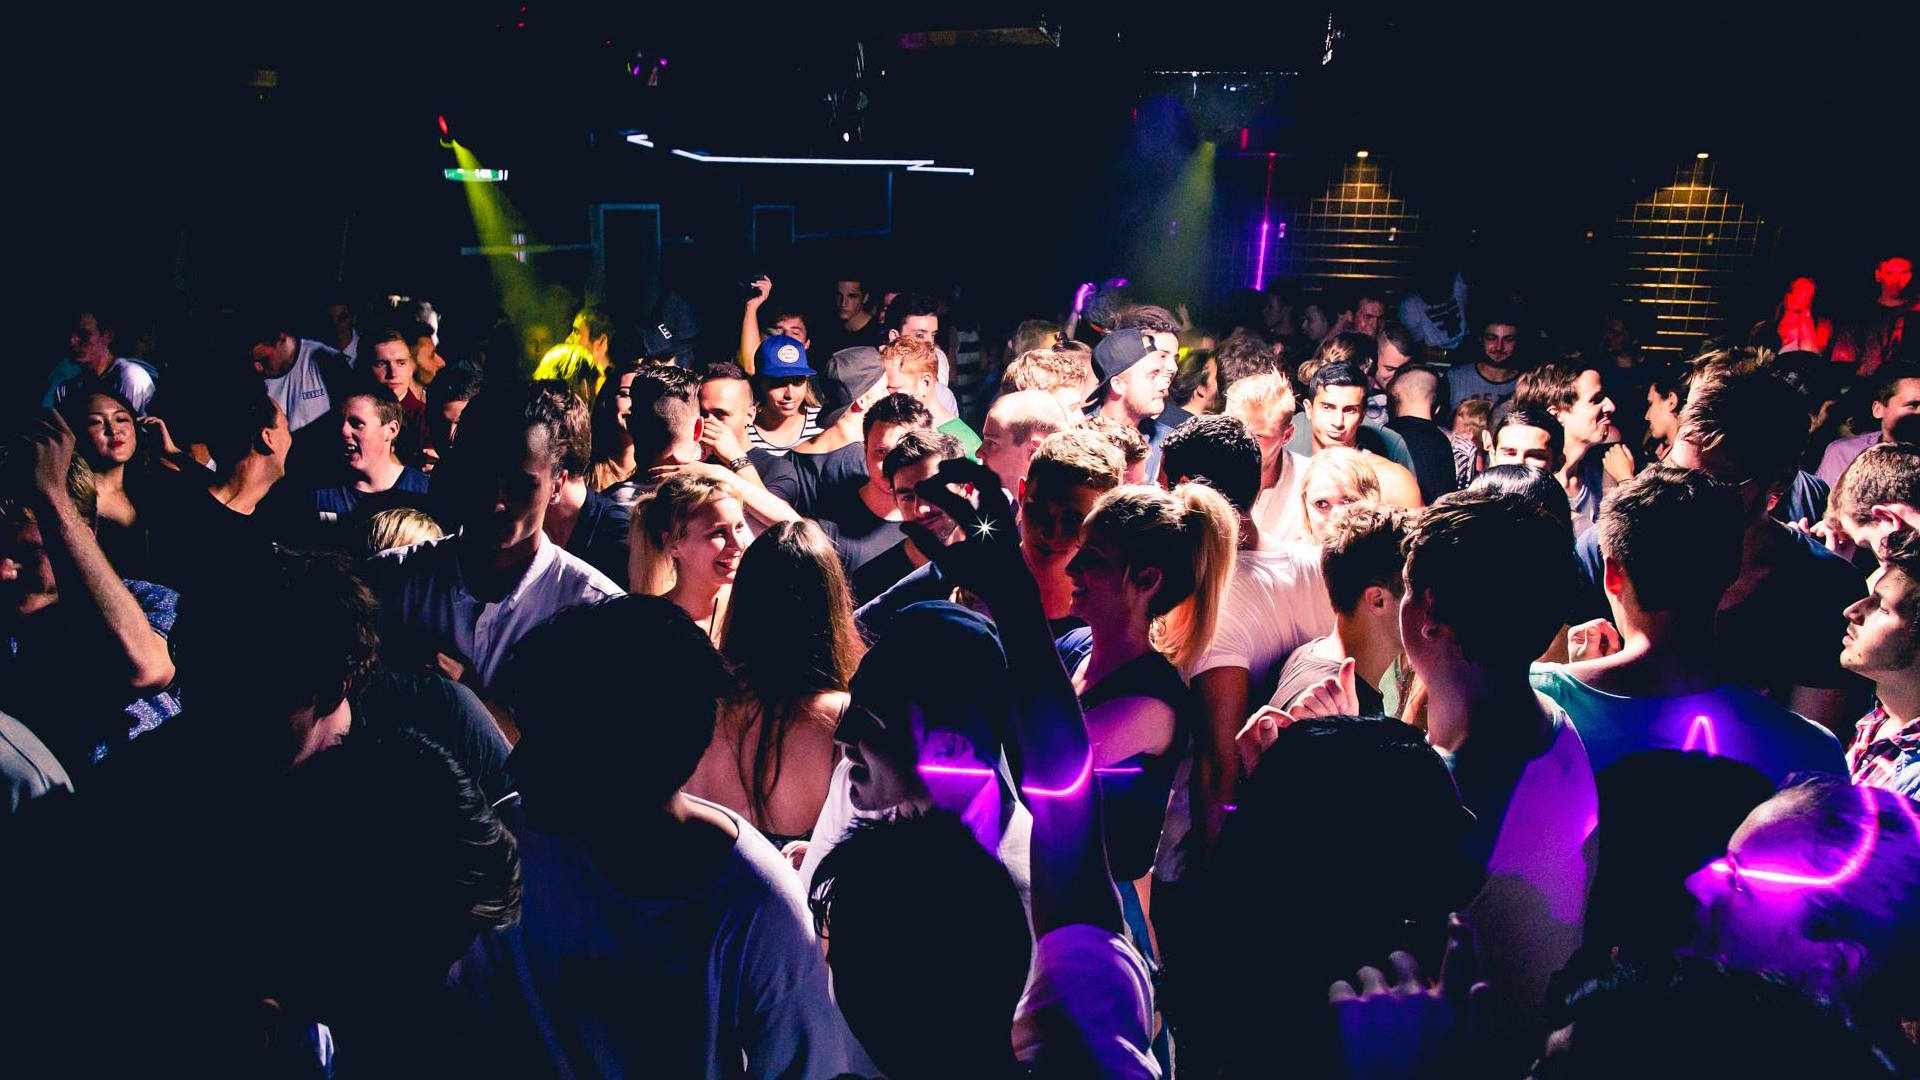 Lockout blamed for closure of Kings Cross nightclub Soho